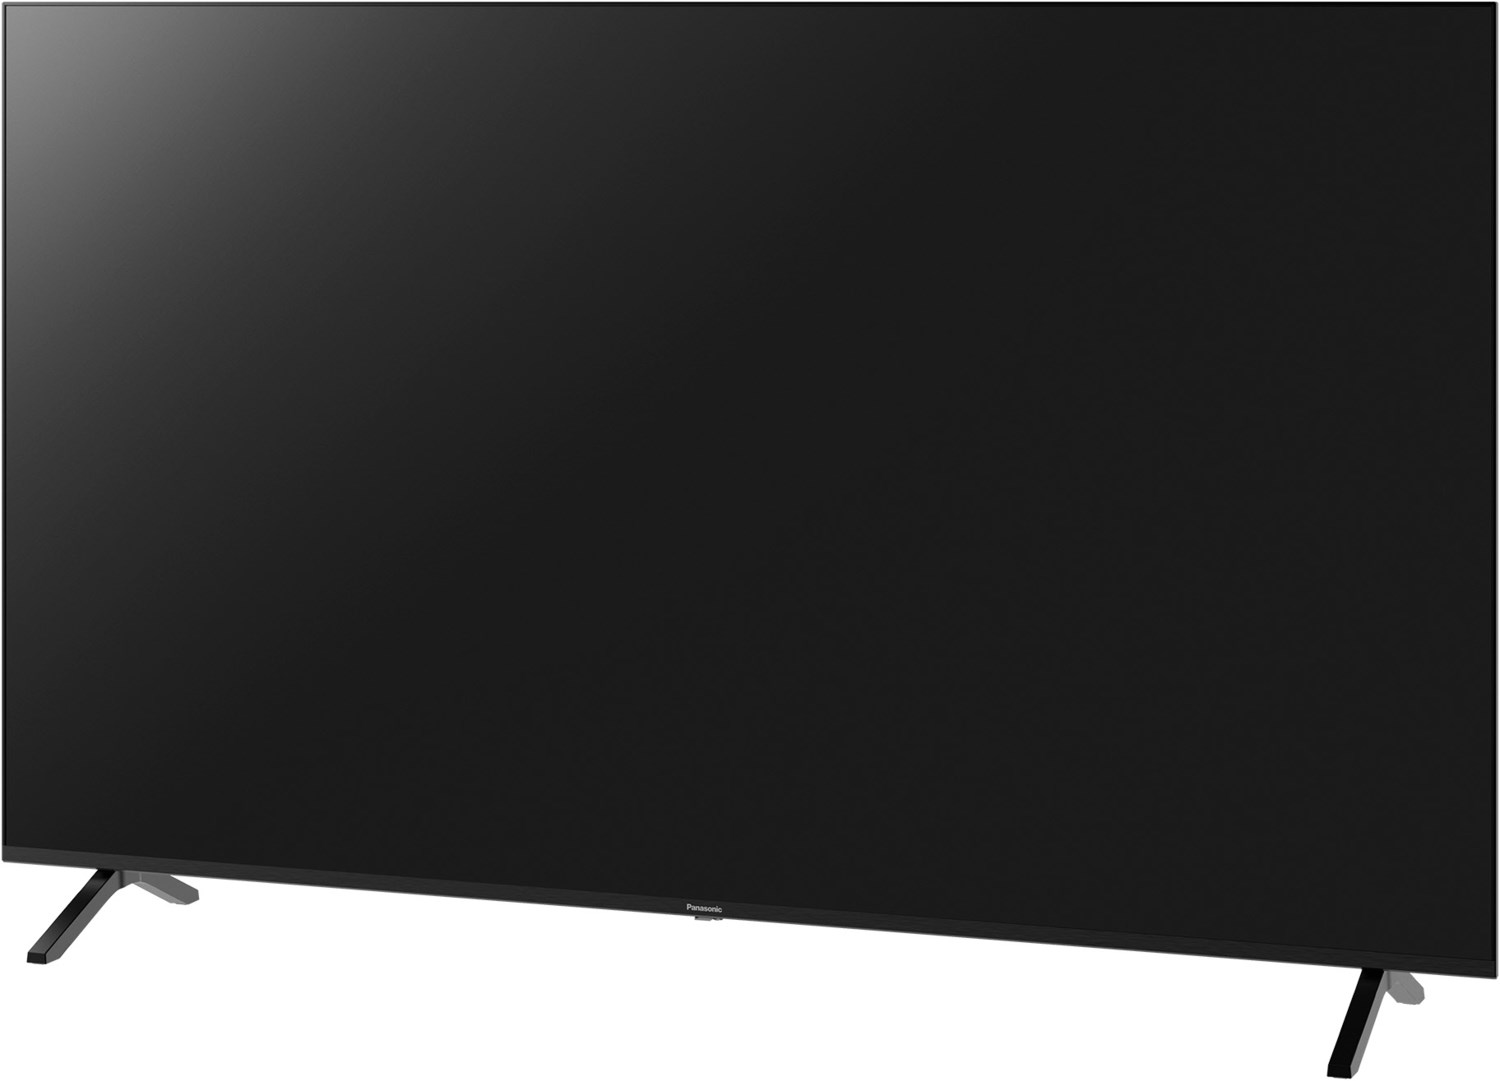 Panasonic 75 Zoll (189cm) 4K UHD HDR LCD TV schwarz